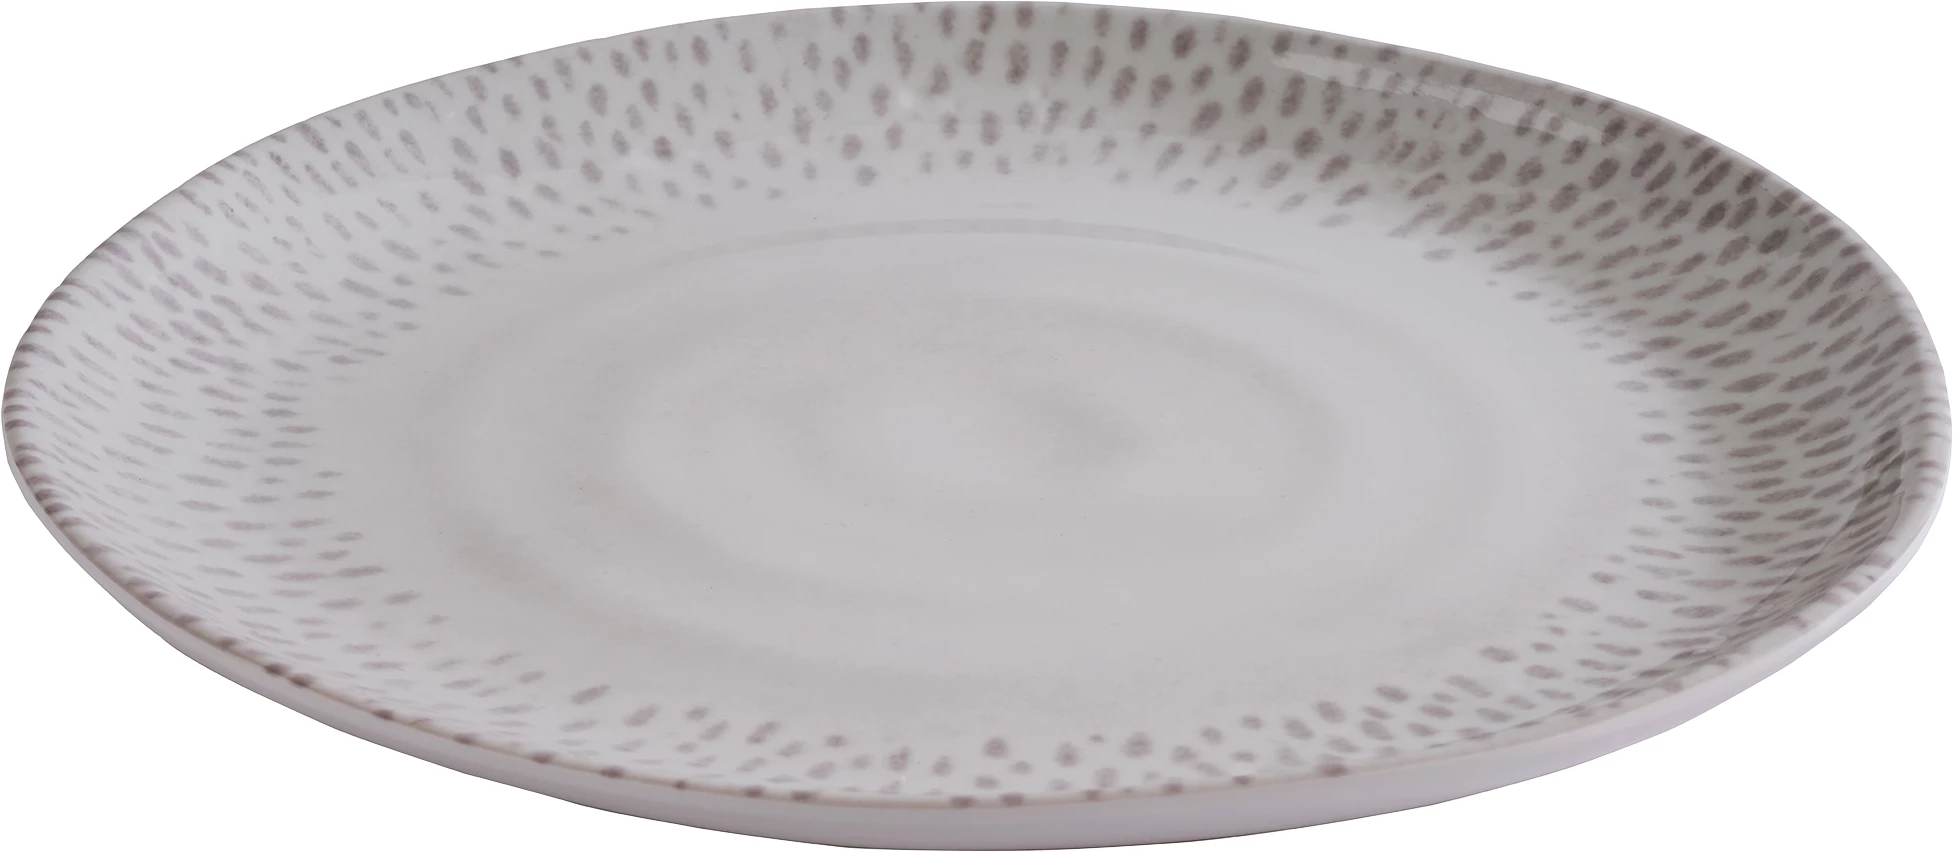 APS Footmark flad tallerken, hvid/grå, ø21 cm